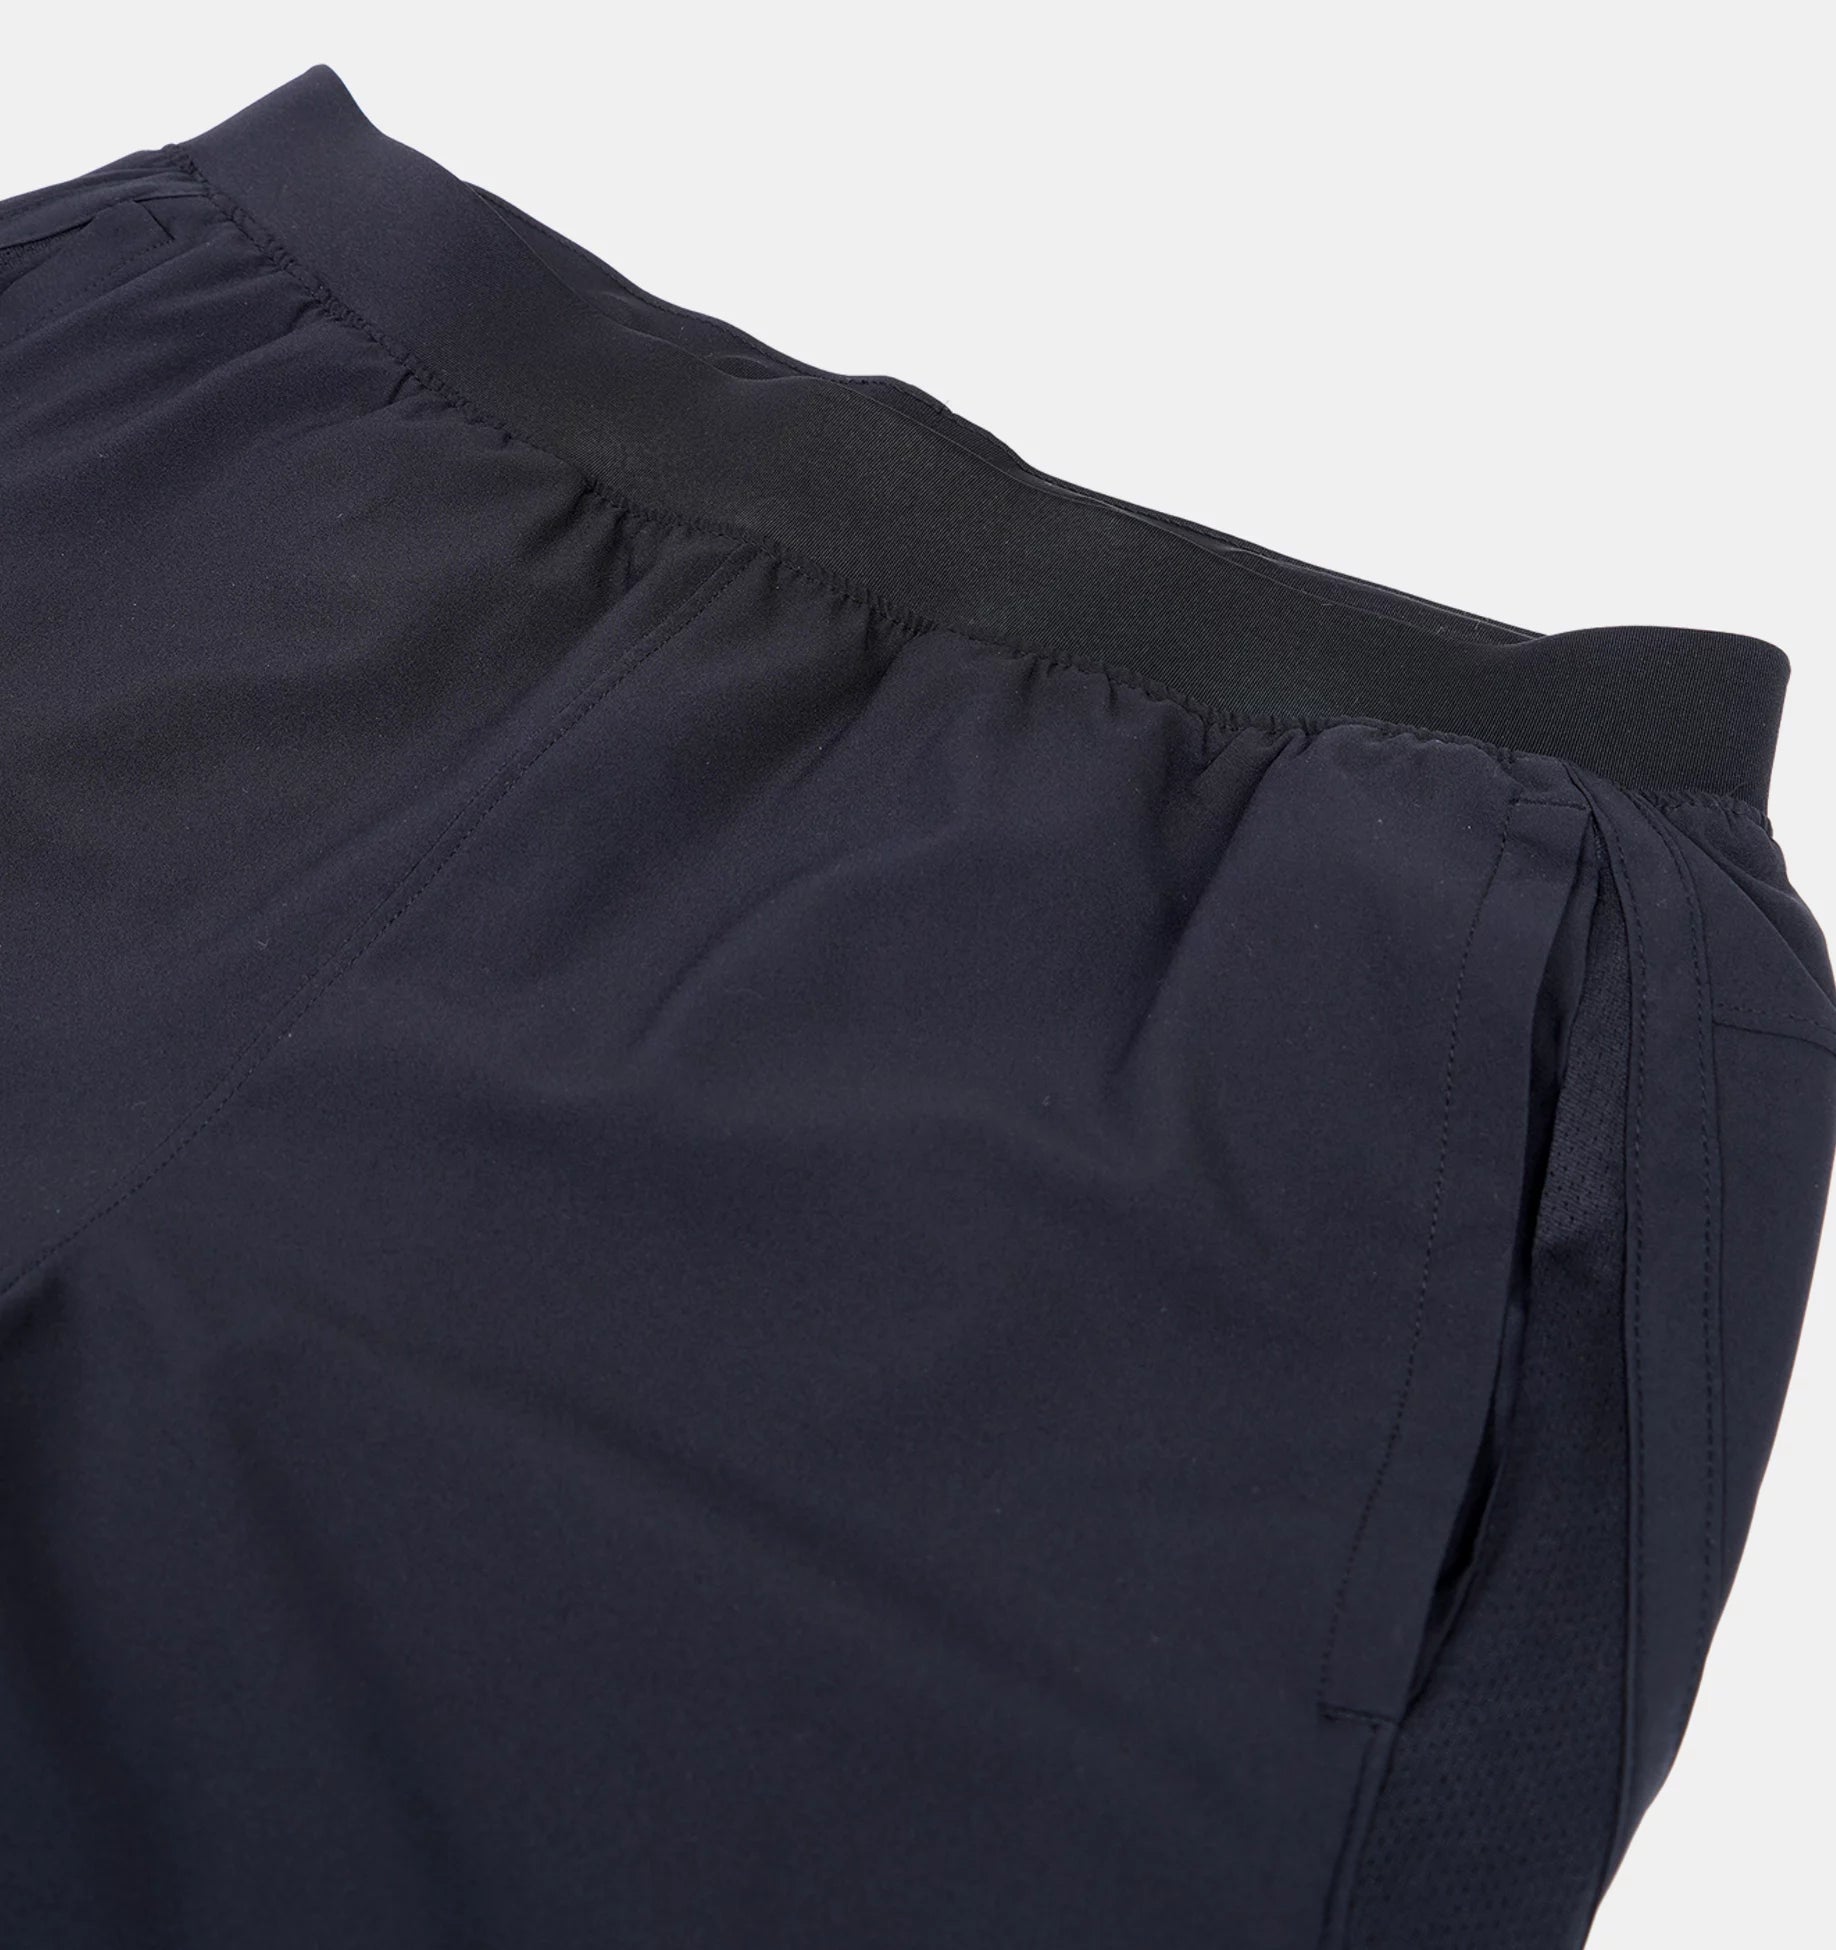 Men's UA Launch Run 7" Shorts - black